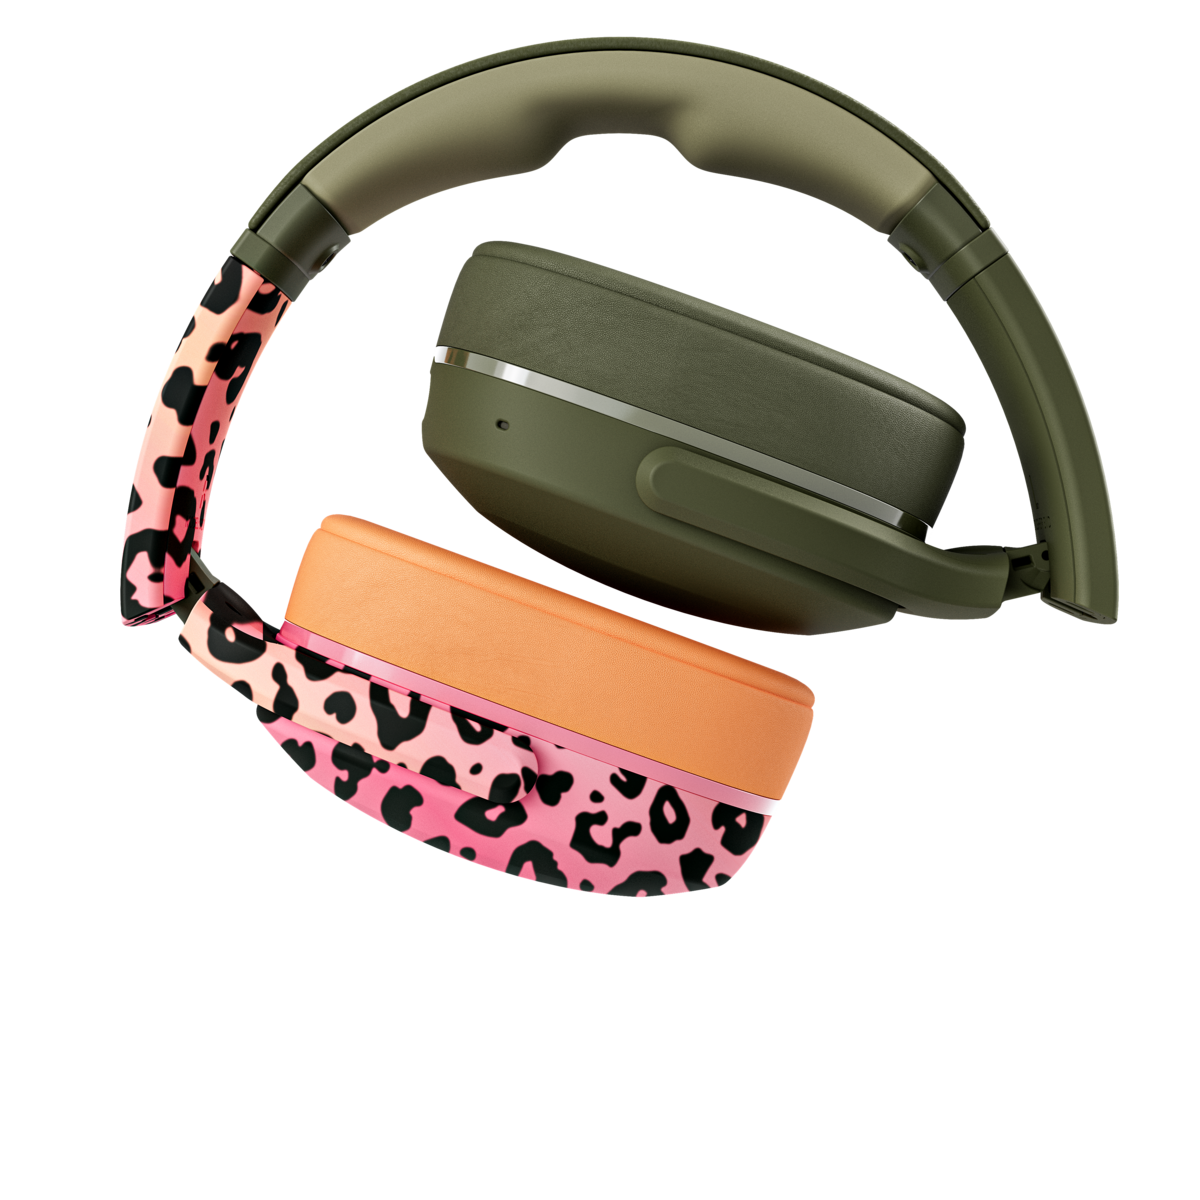 Skullcandy Crusher Wireless Bluetooth Headphones with Mic and